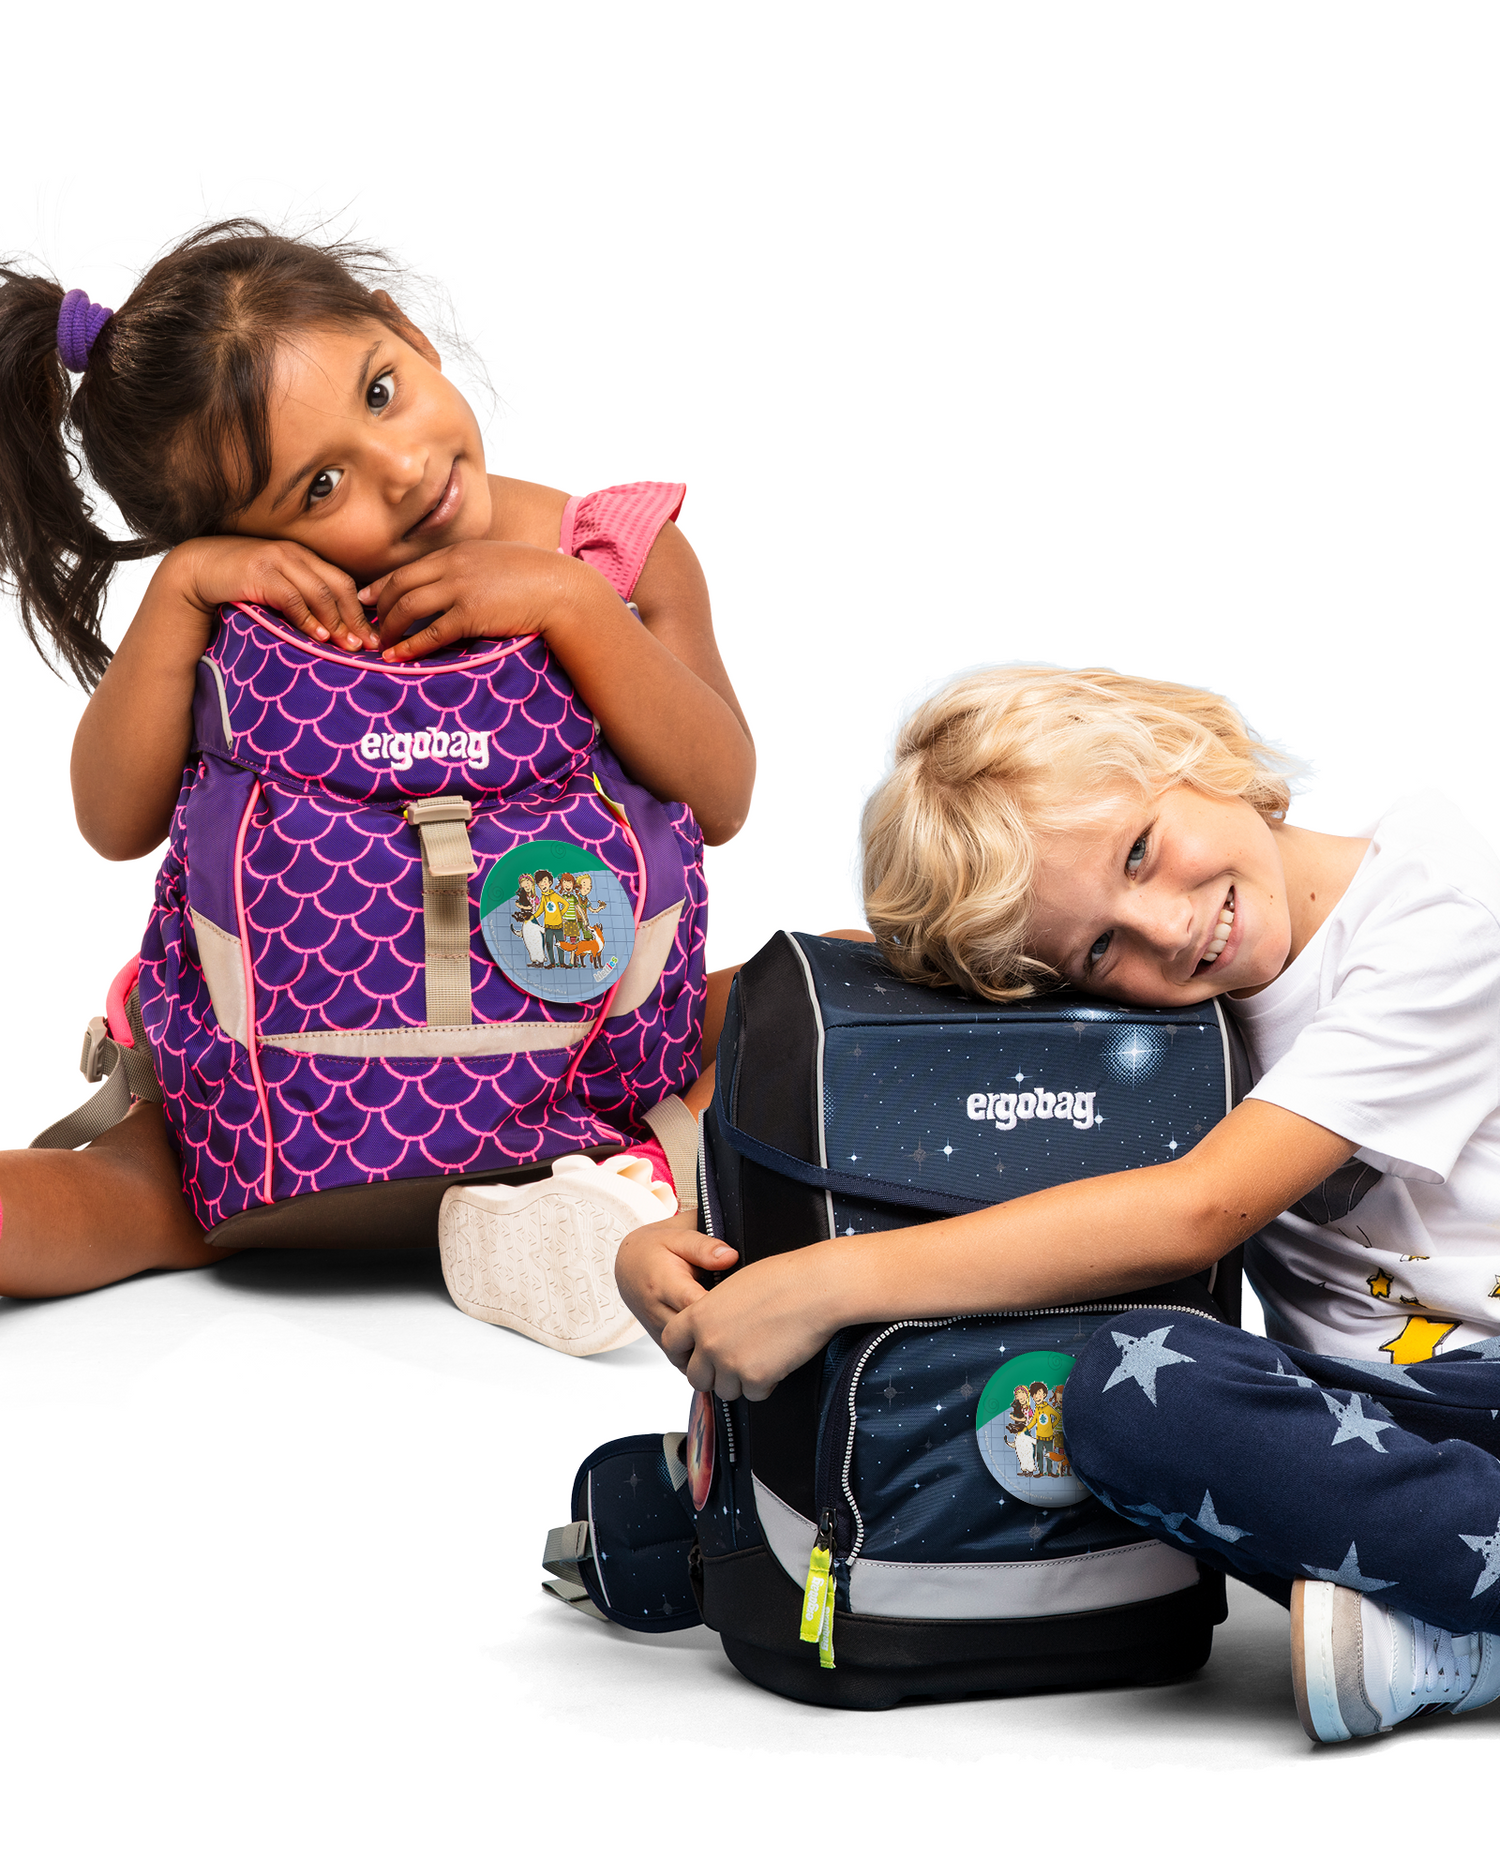 SdmT Freunde Klettie: Attached to childrens ergobag backpack